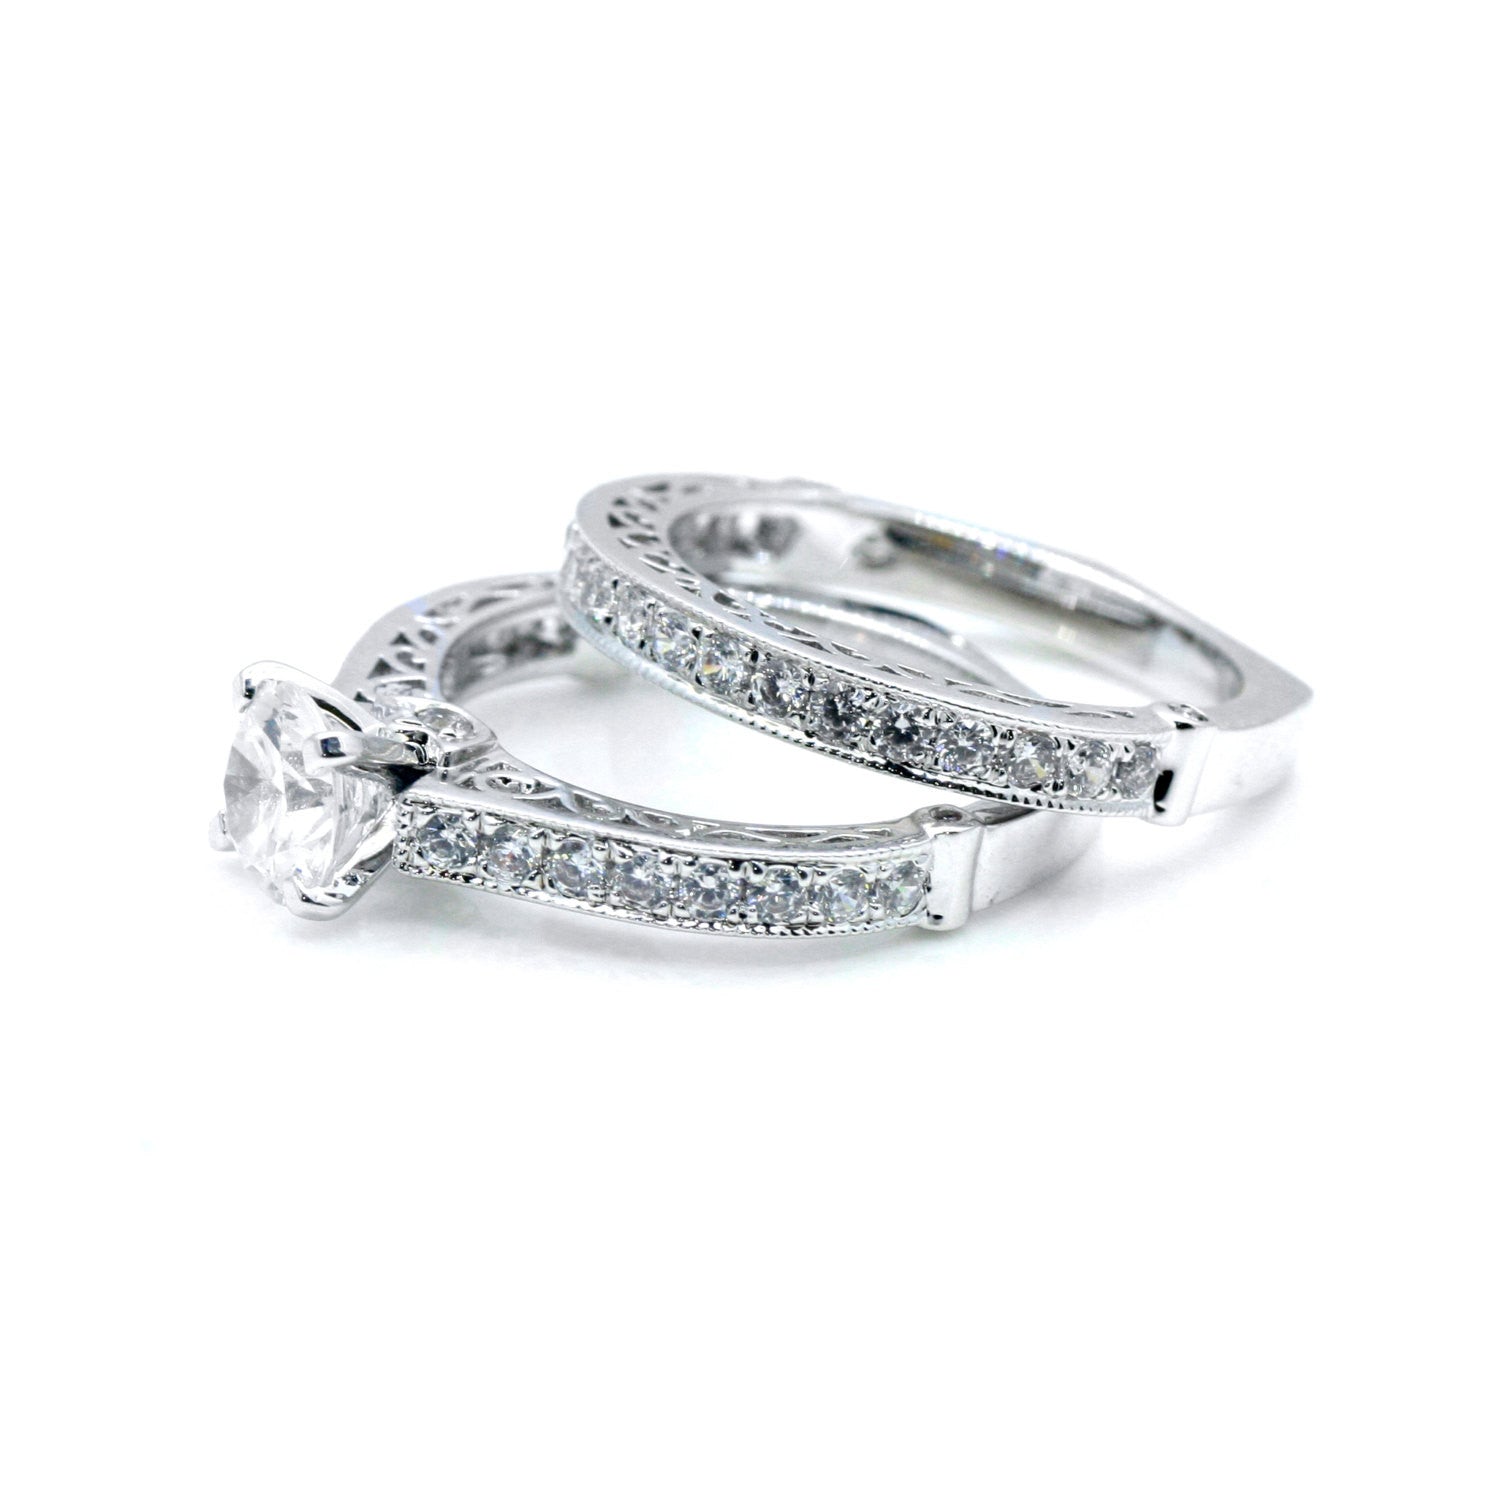 Moissanite Engagement Ring Wedding Set, Unique Style With 1 Carat Forever Brilliant Moissanite & 1.0 Carat Diamonds - FB76335